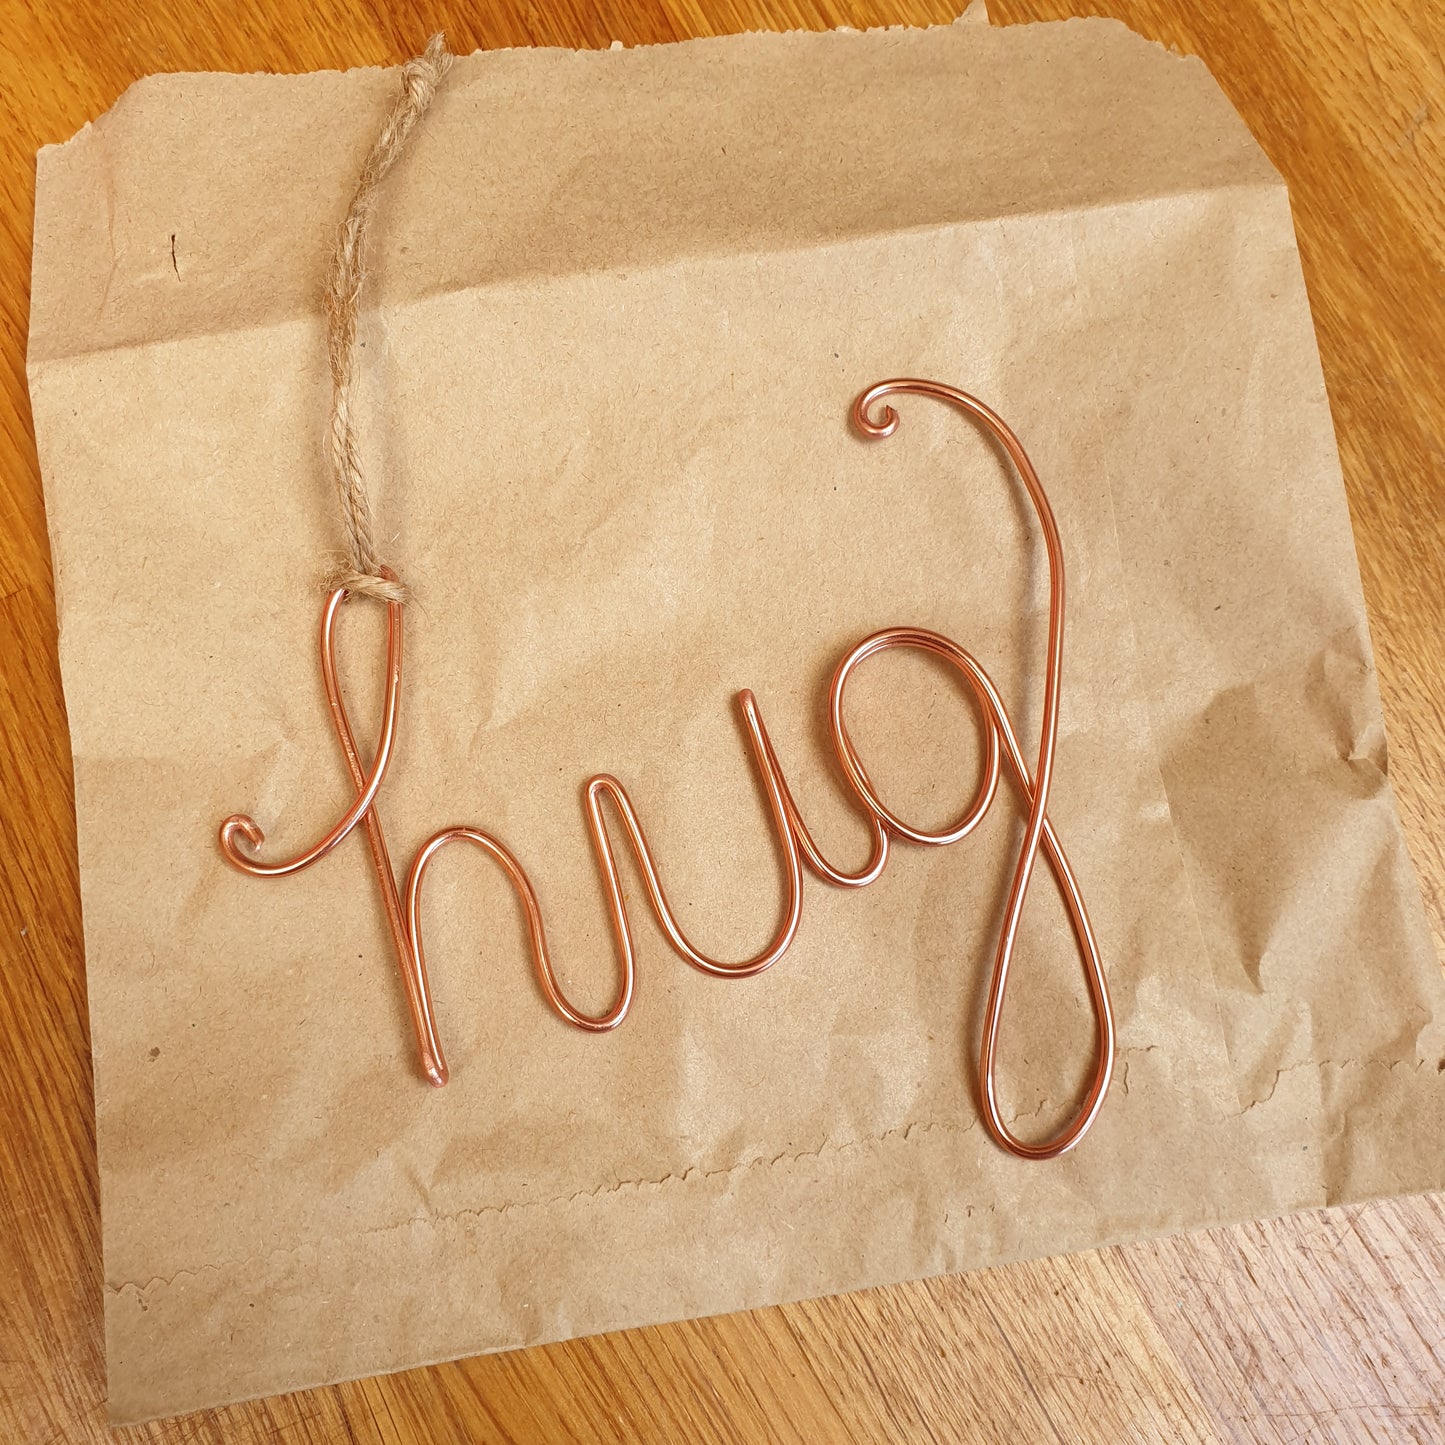 Wire Hug - single